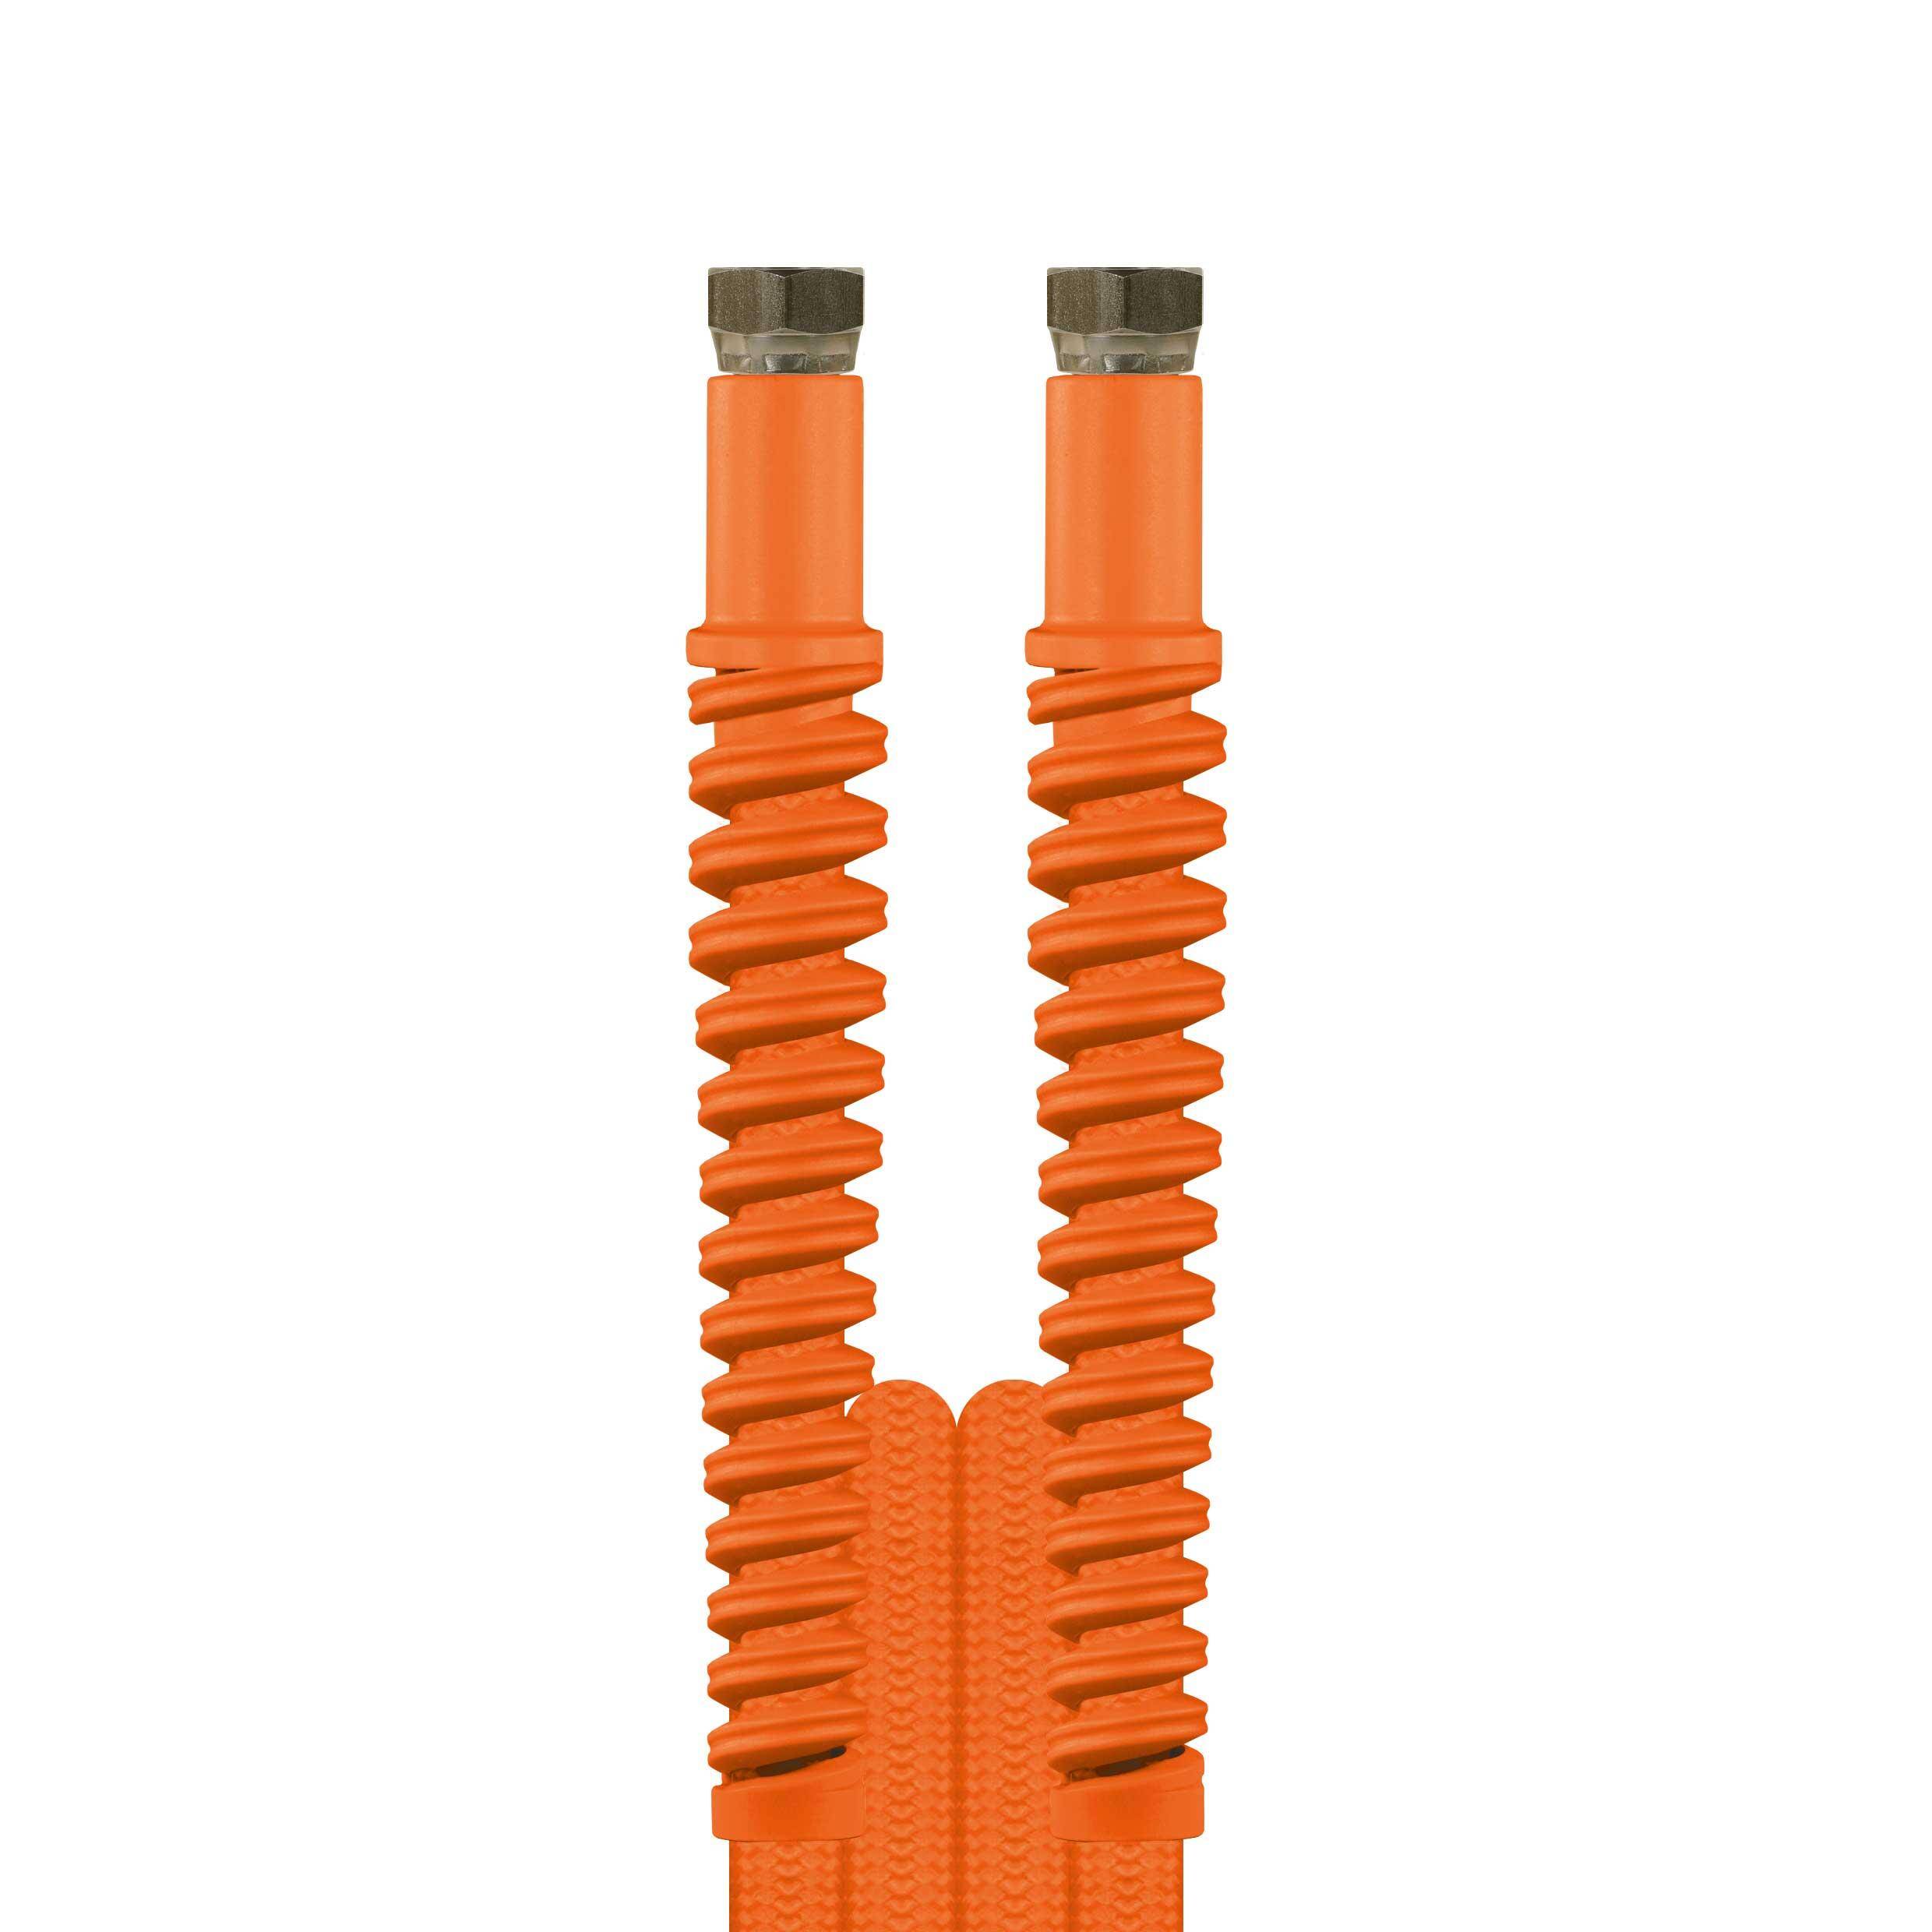 Wąż CARWASH-COMFORT orange 4,2 mb okuty